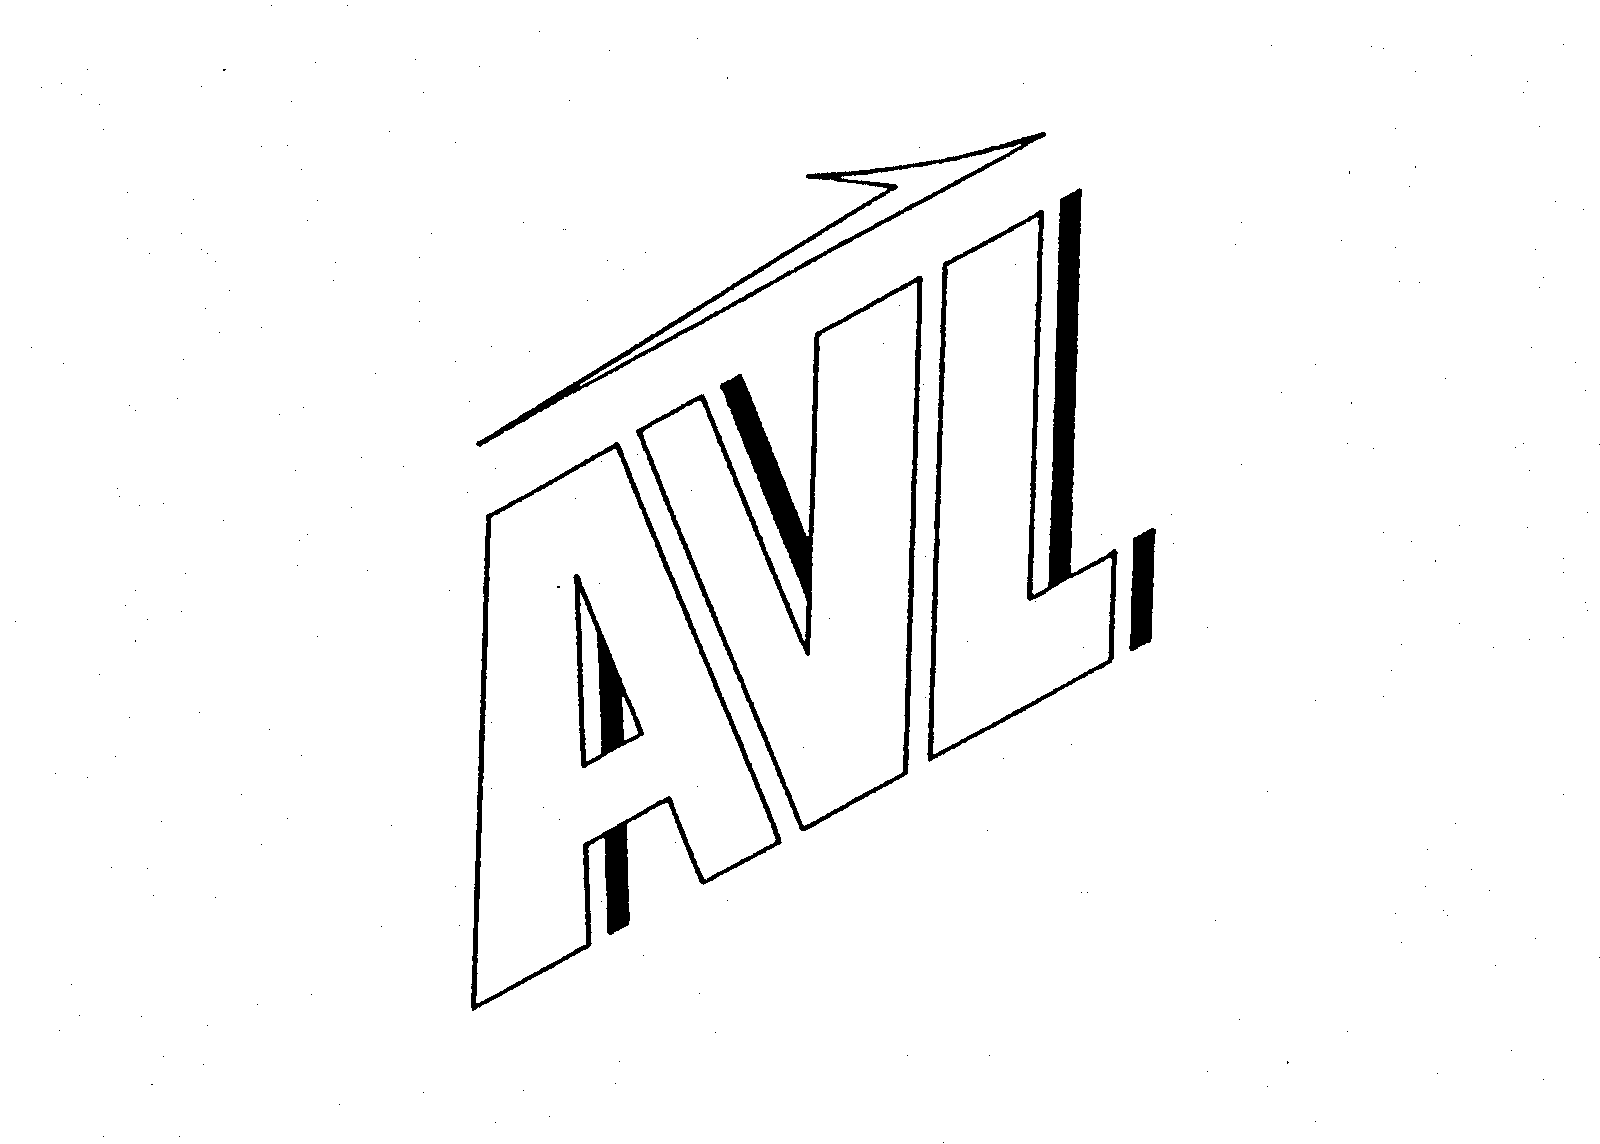 AVL Audio Visual Laboratories, Inc. Trademark Registration